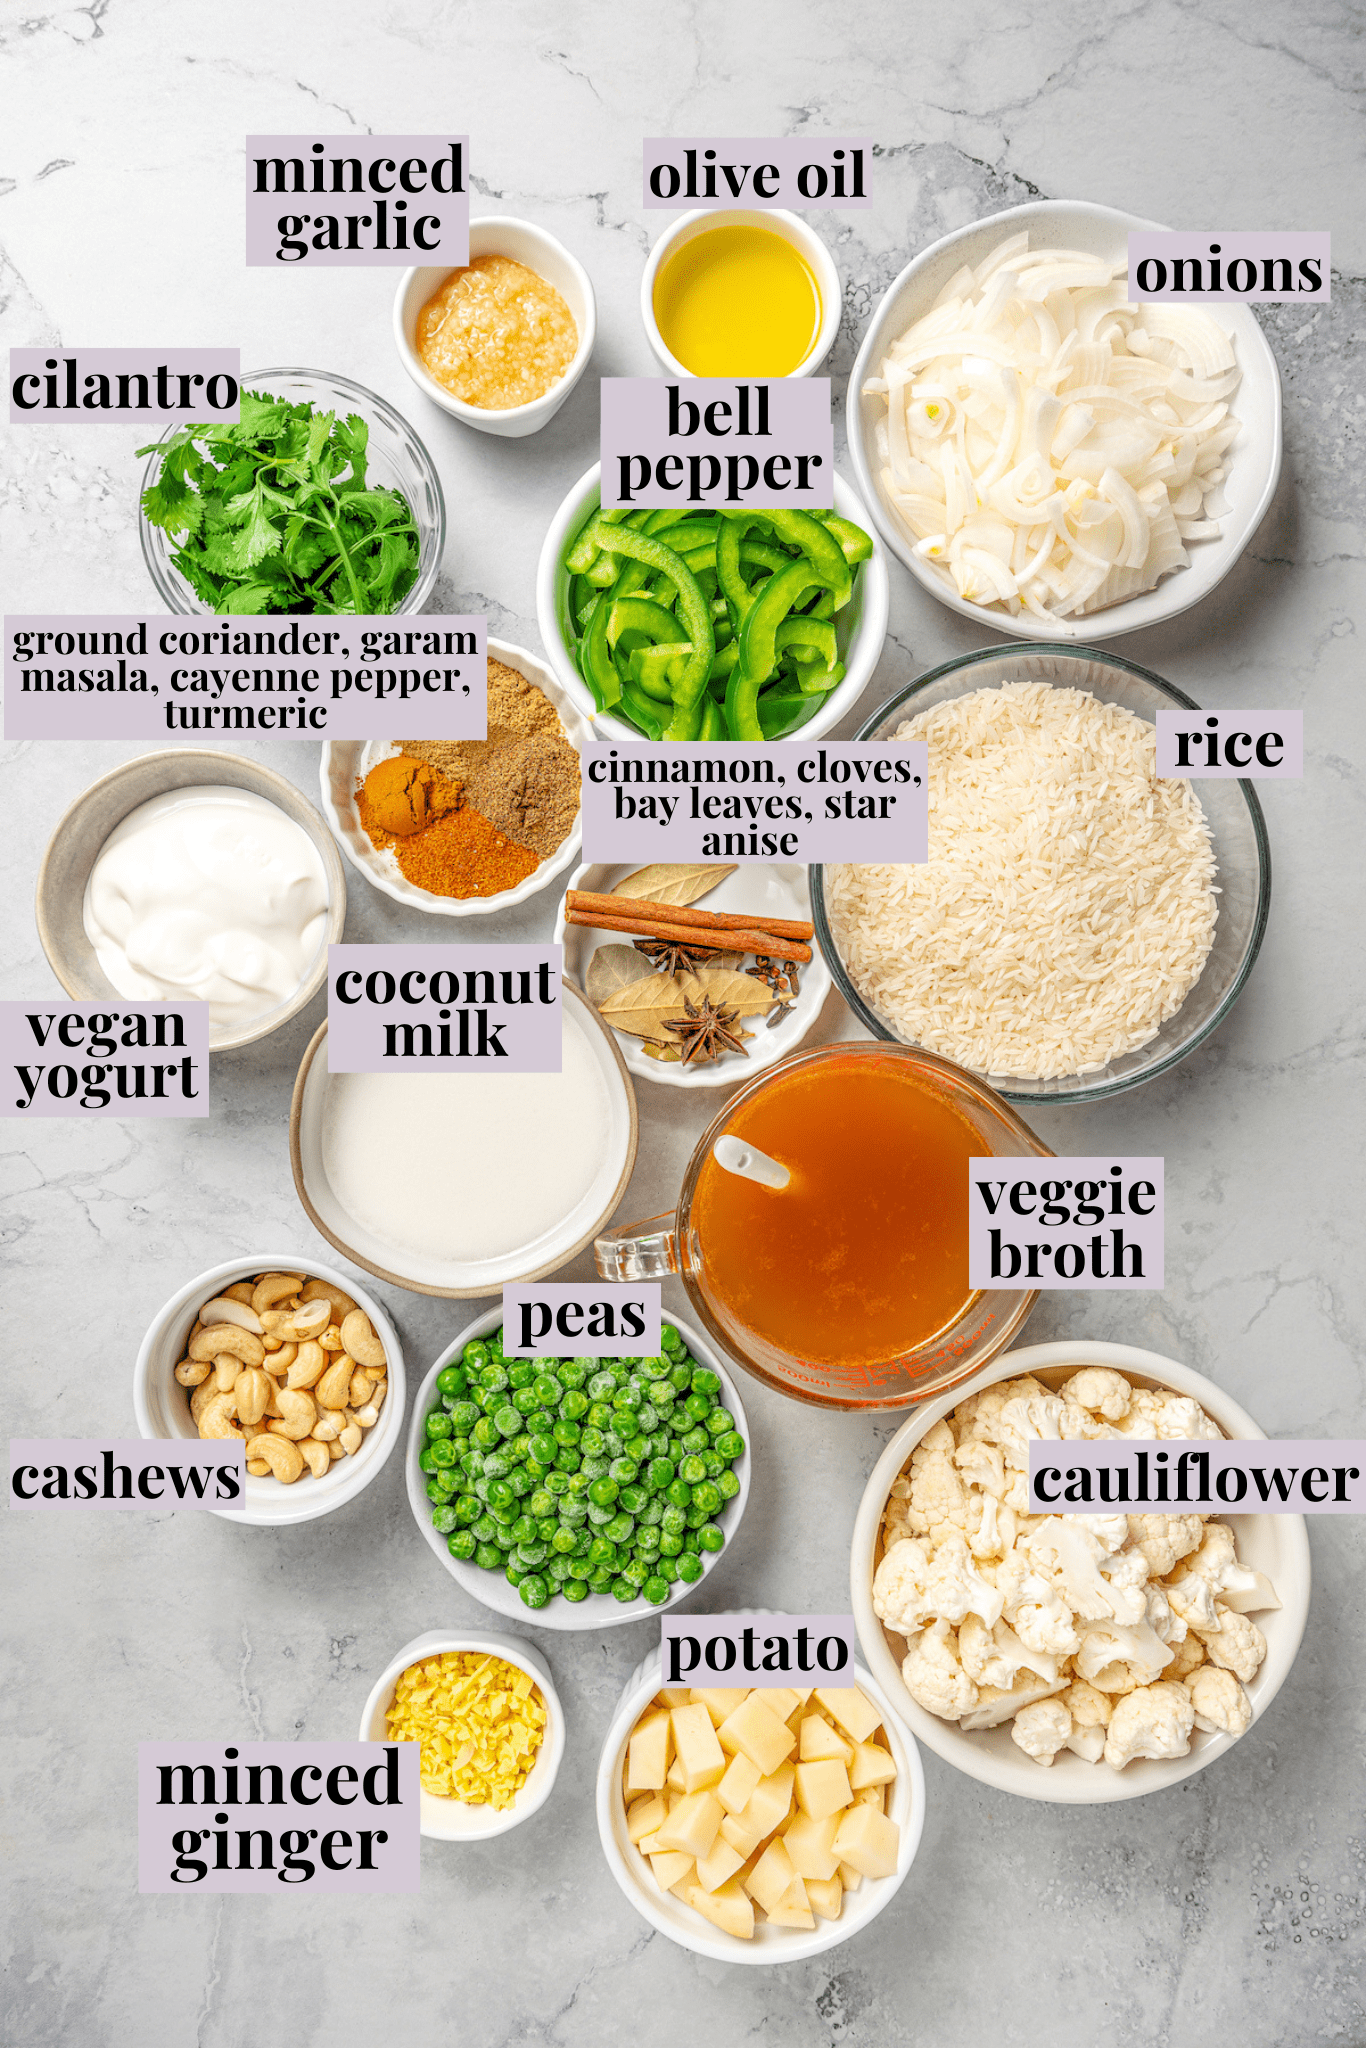 Overhead view of vegetable biryani ingredients with labels